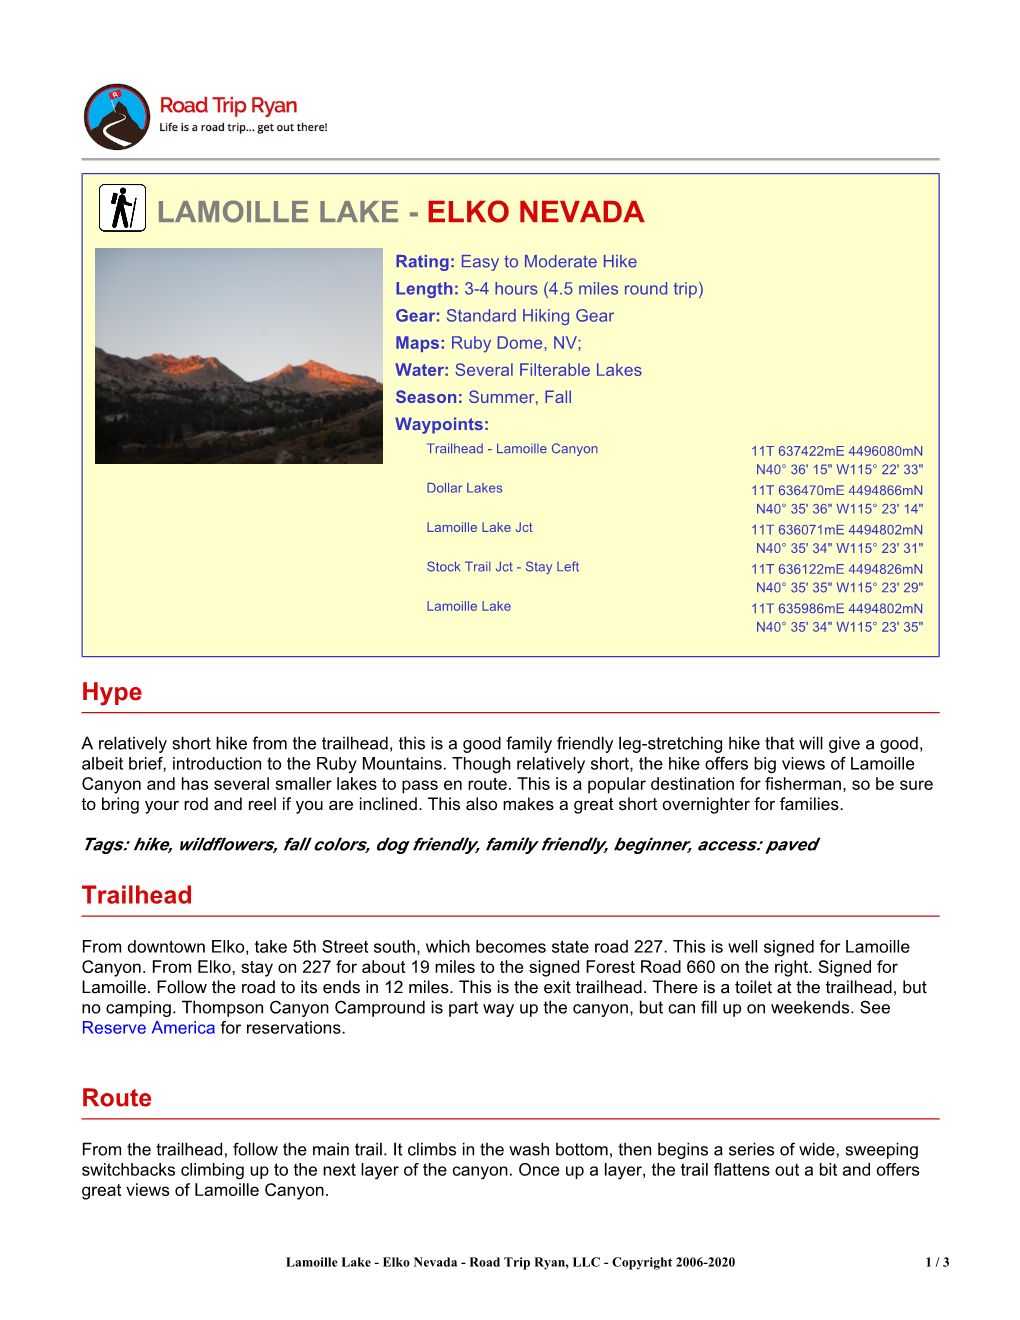 Lamoille Lake - Elko Nevada